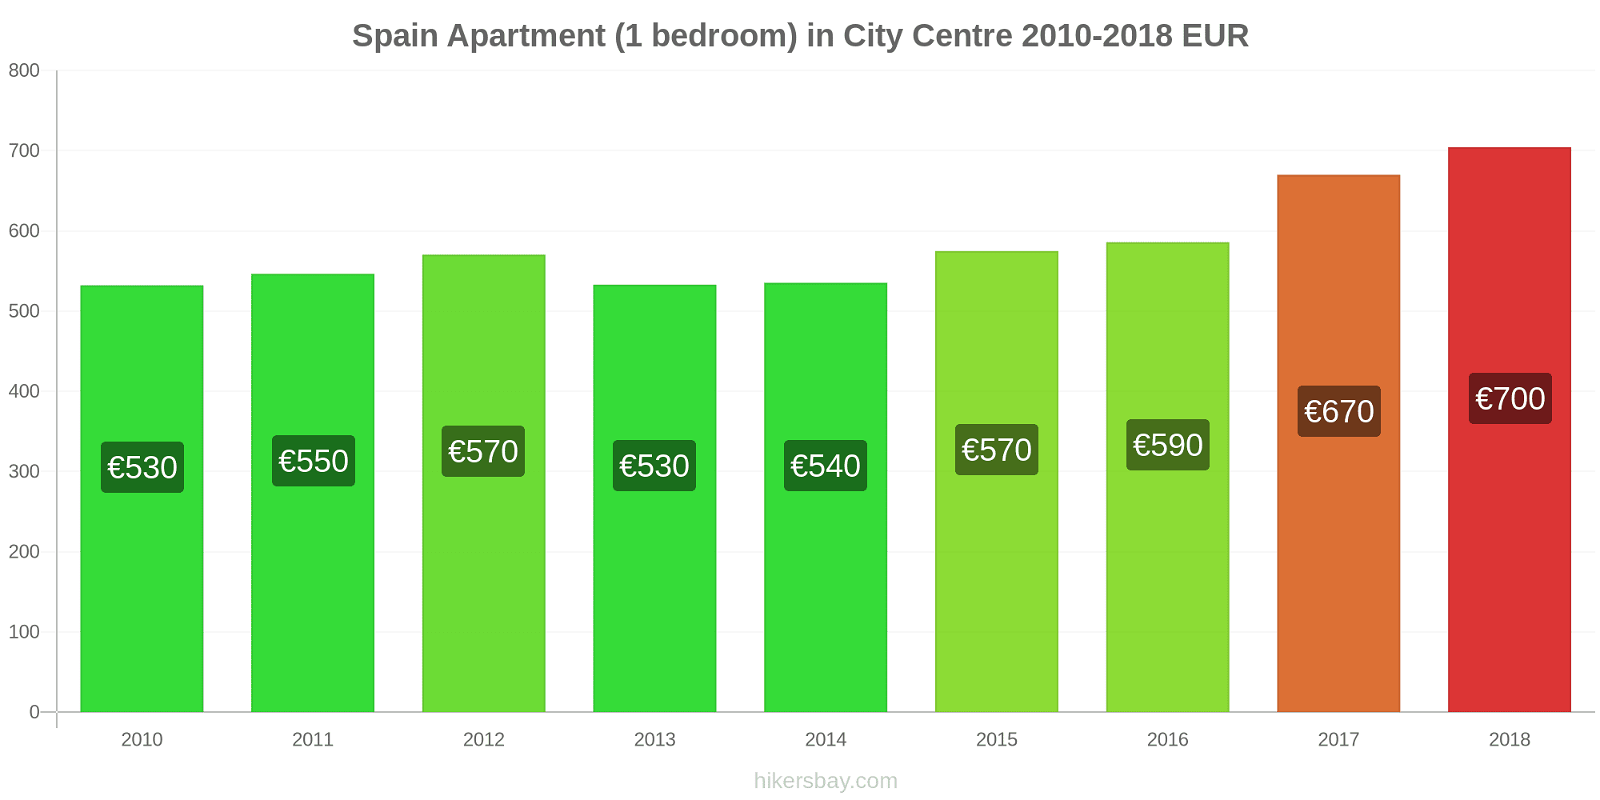 Spain price changes Apartment (1 bedroom) in City Centre hikersbay.com